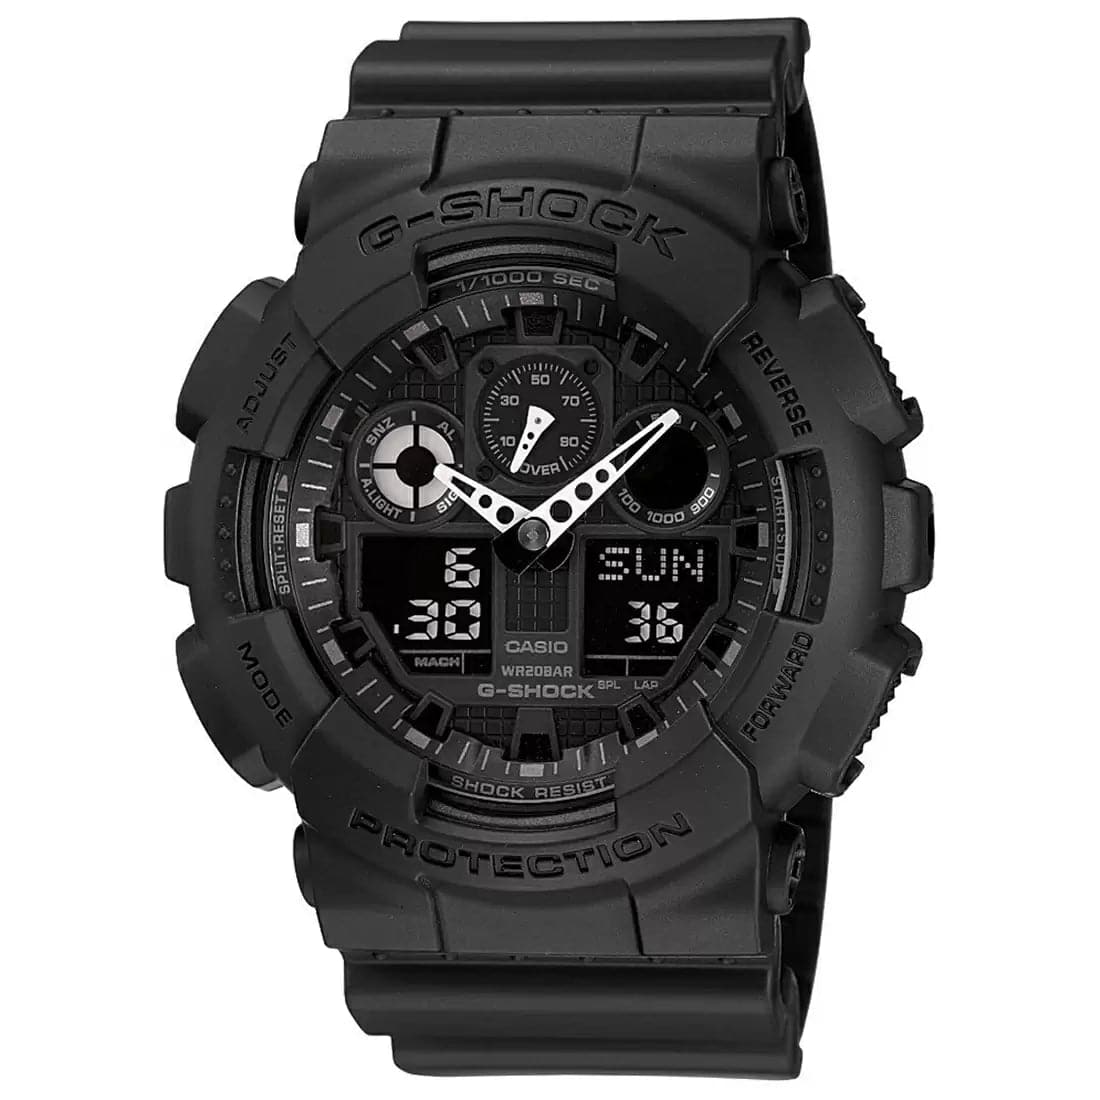 Casio G-Shock Analog-Digital Men's Watch G270 GA-100-1A1DR - Kamal Watch Company